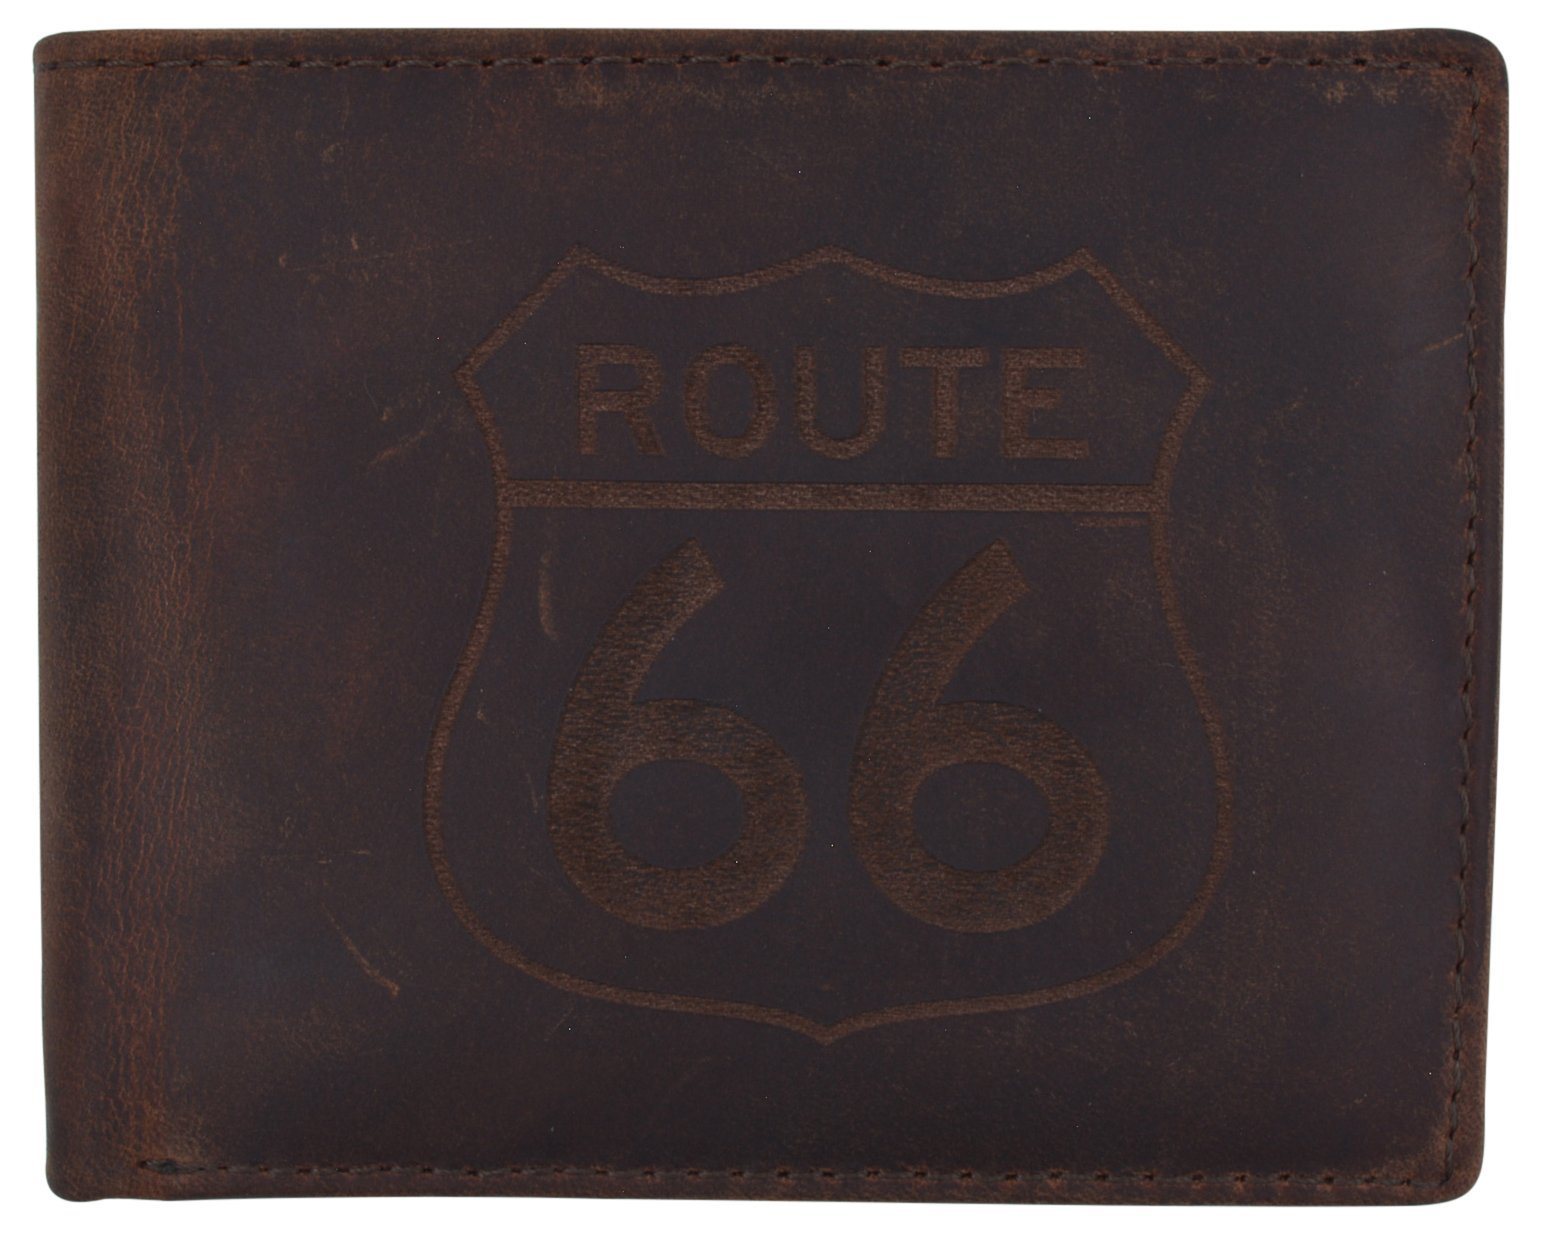 Route 66 Wallet